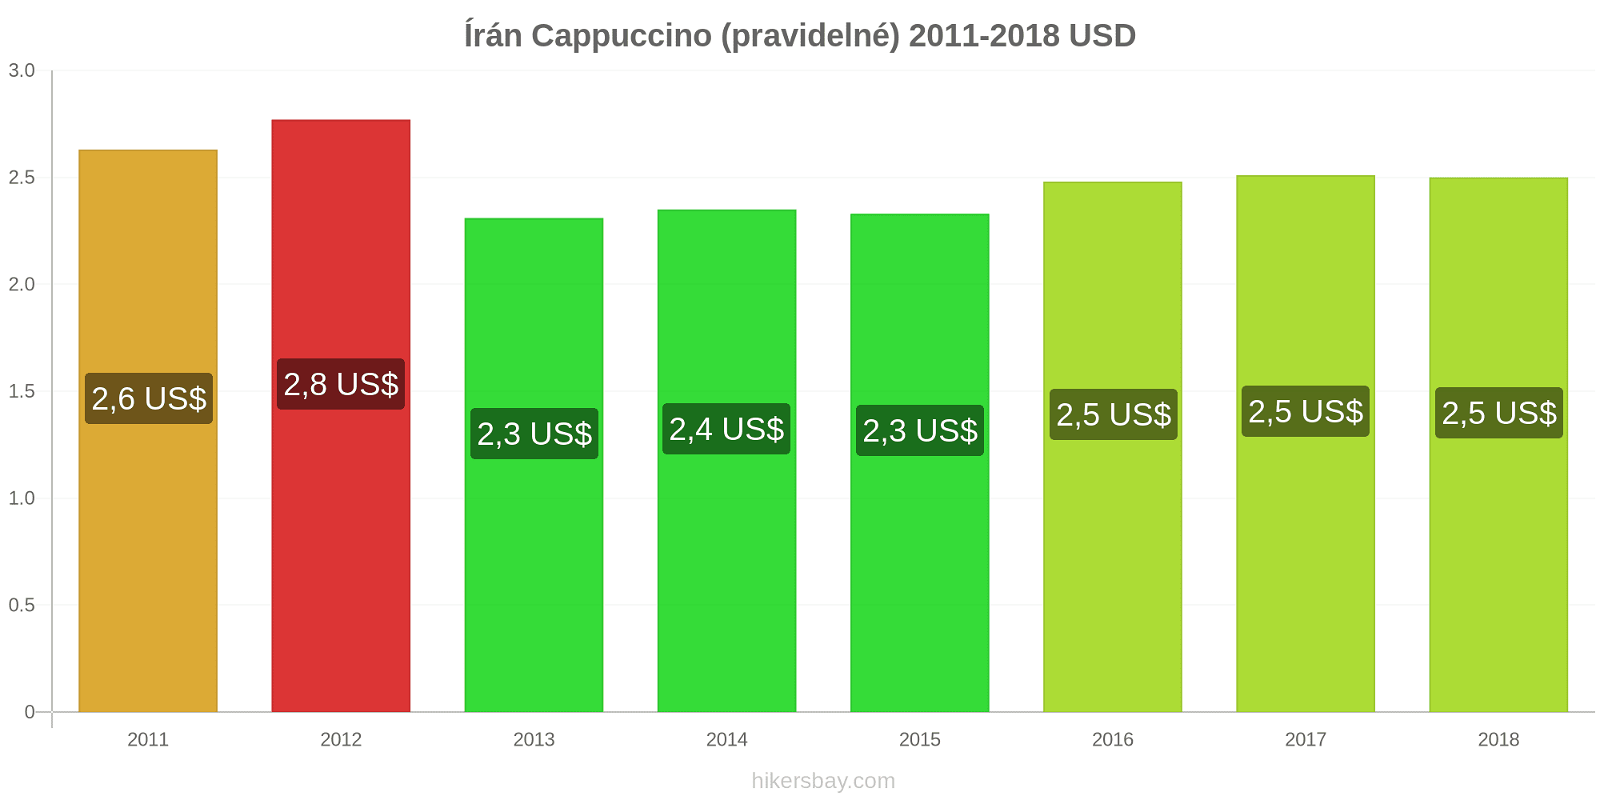 Írán změny cen Cappuccino hikersbay.com